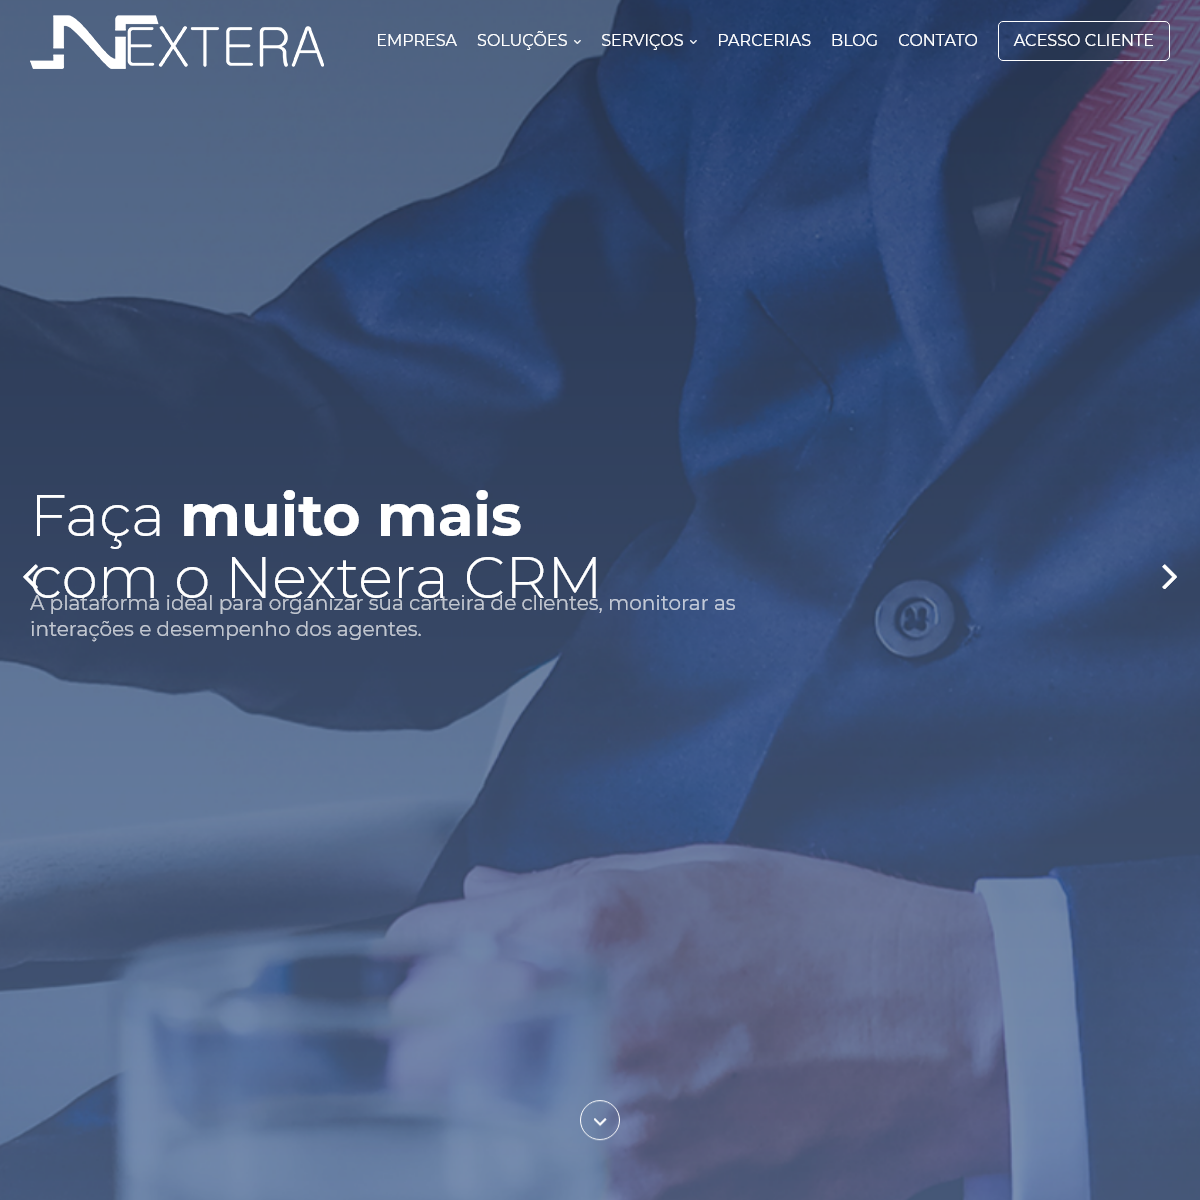 A complete backup of nextera.com.br